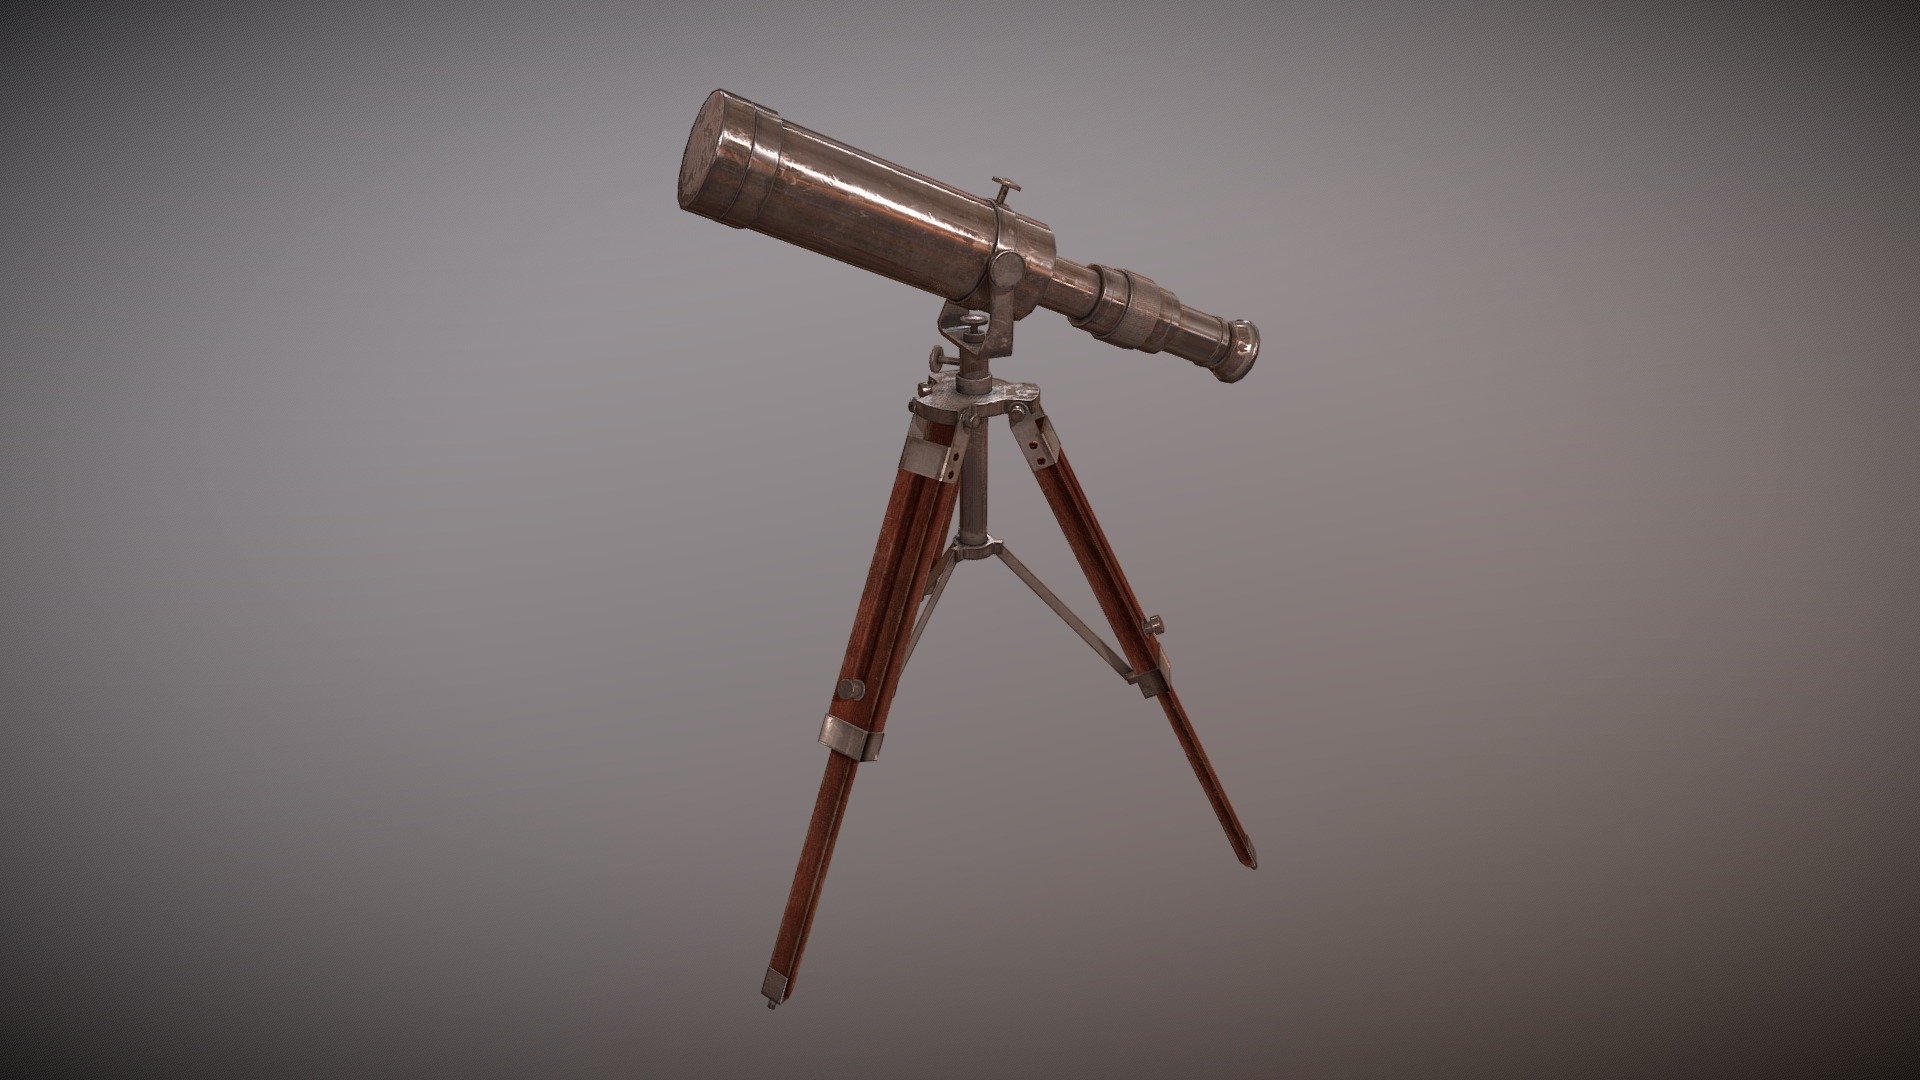 Vintage telescope asset for a TBA game - Telescope - 3D model by mathewsapulovic 3d model